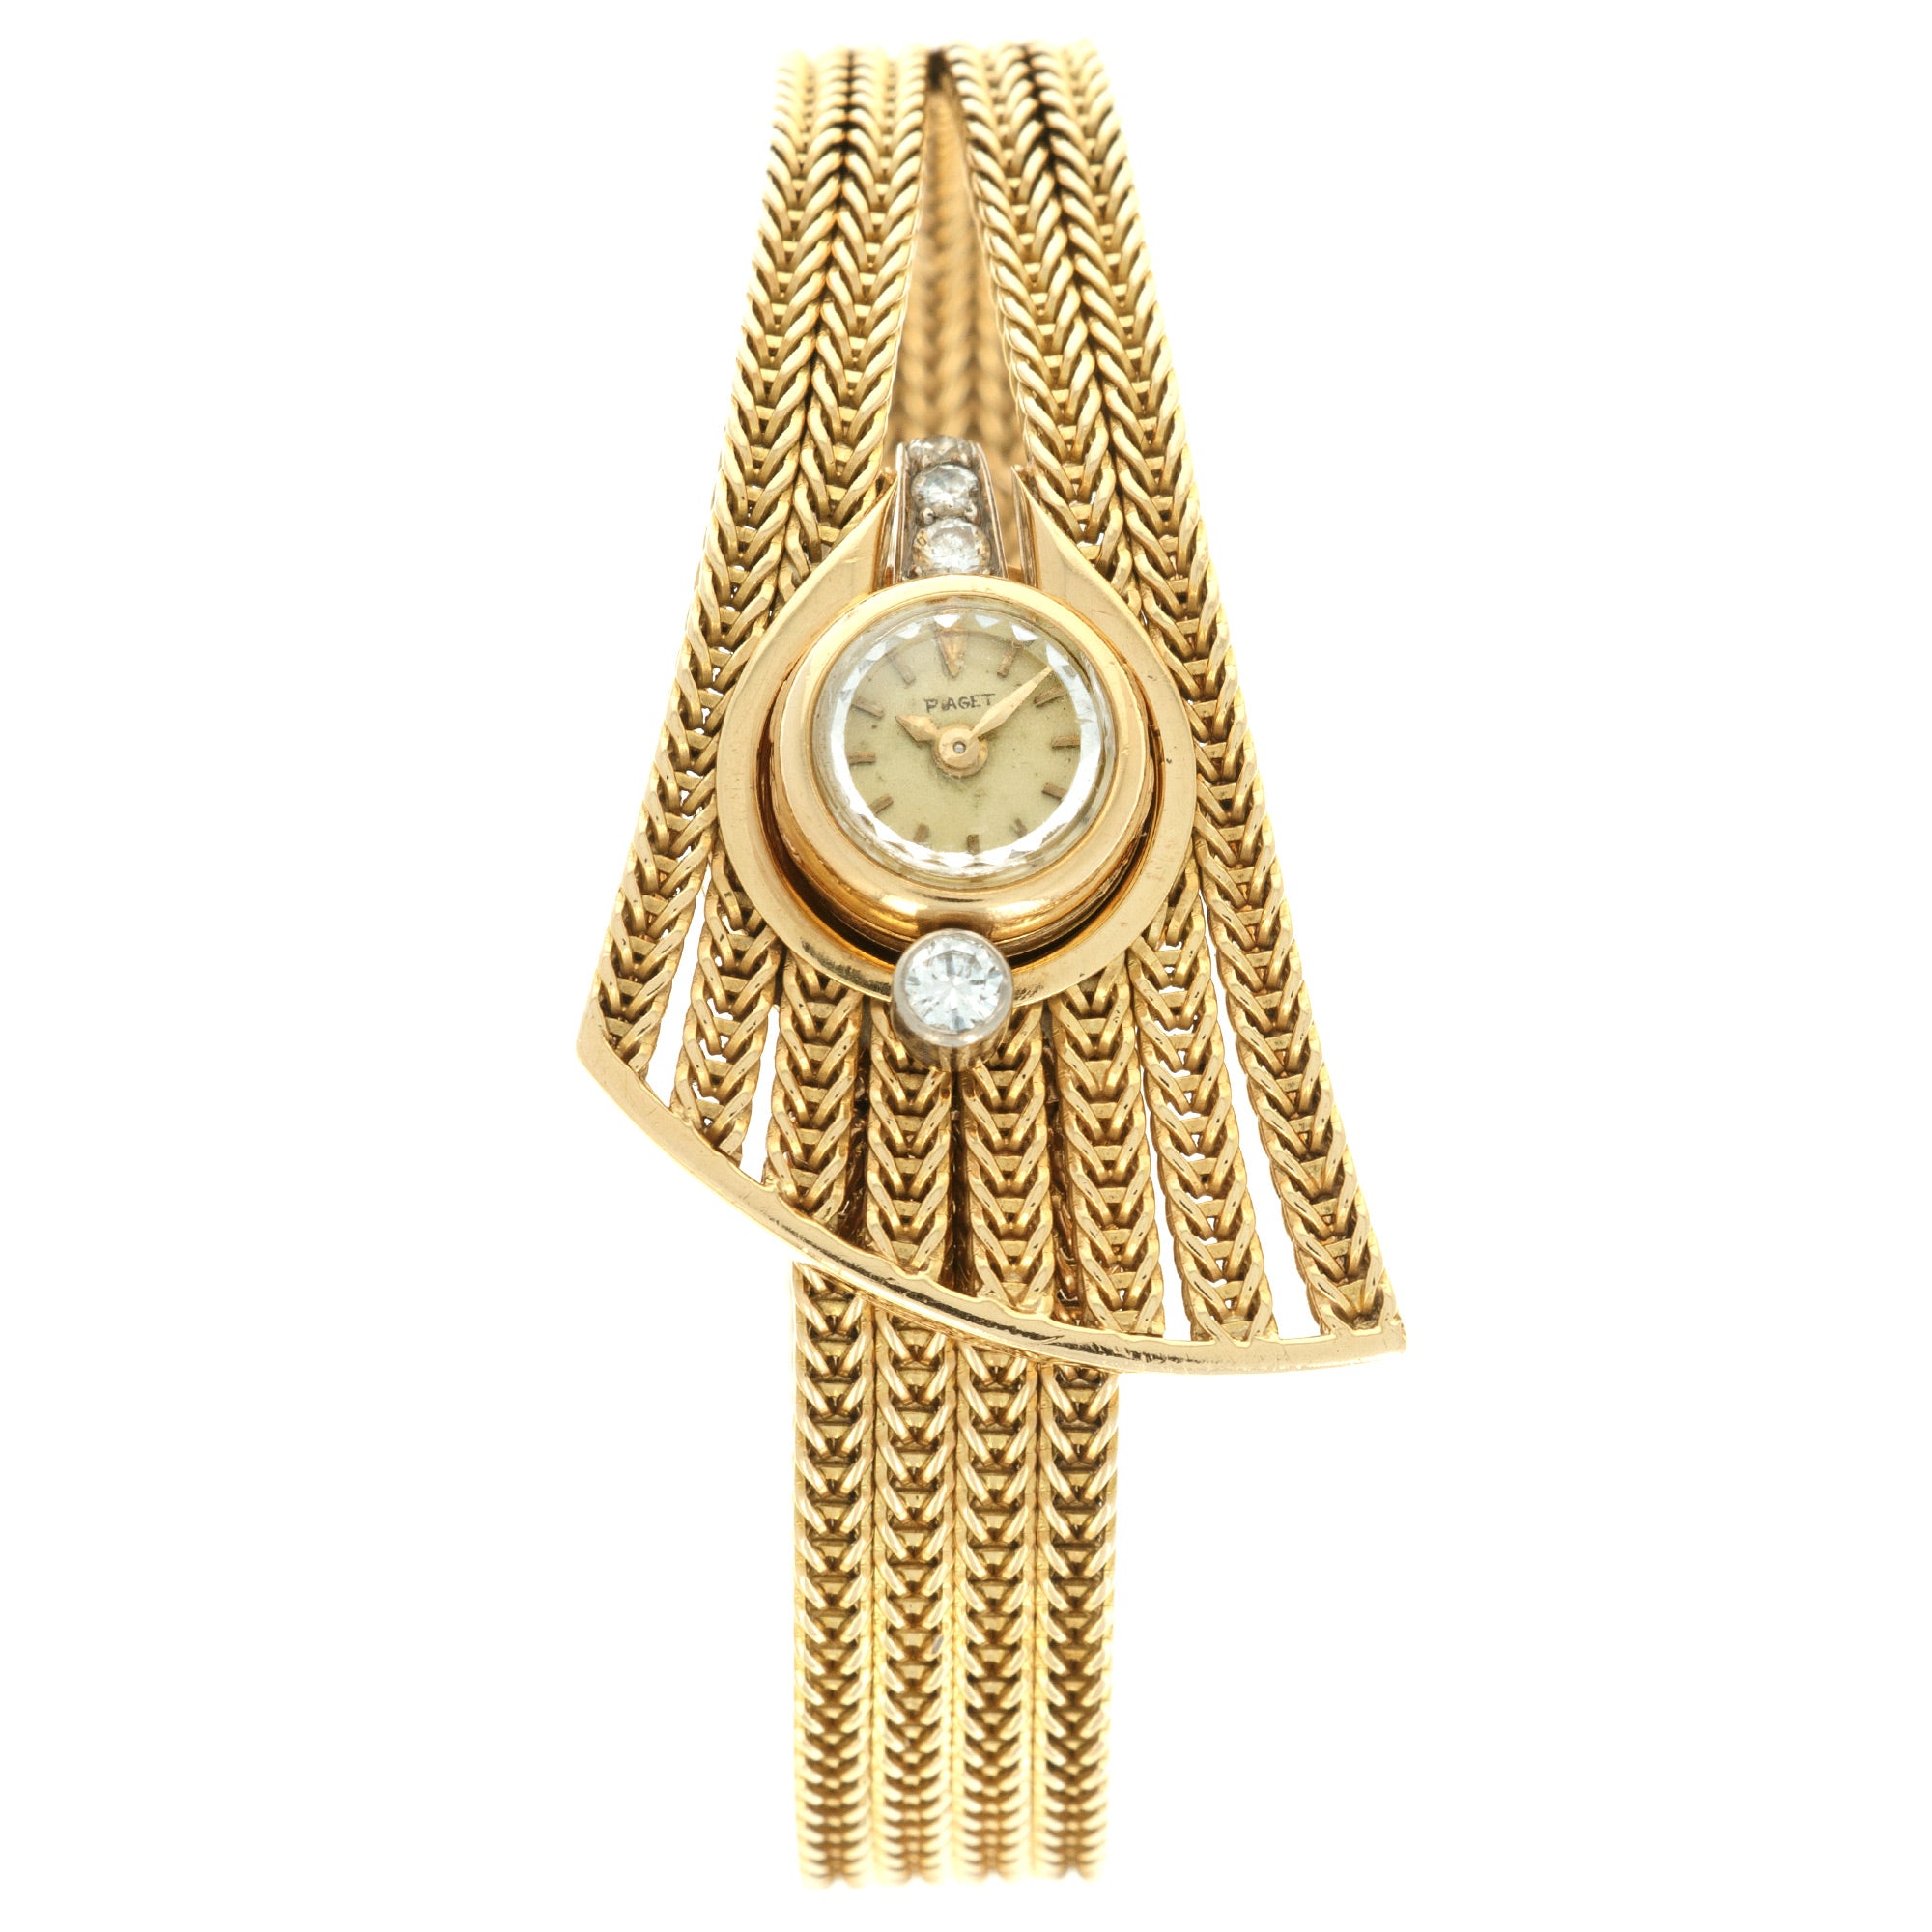 Piaget - Piaget Yellow Gold Diamond Watch, 1960s - The Keystone Watches